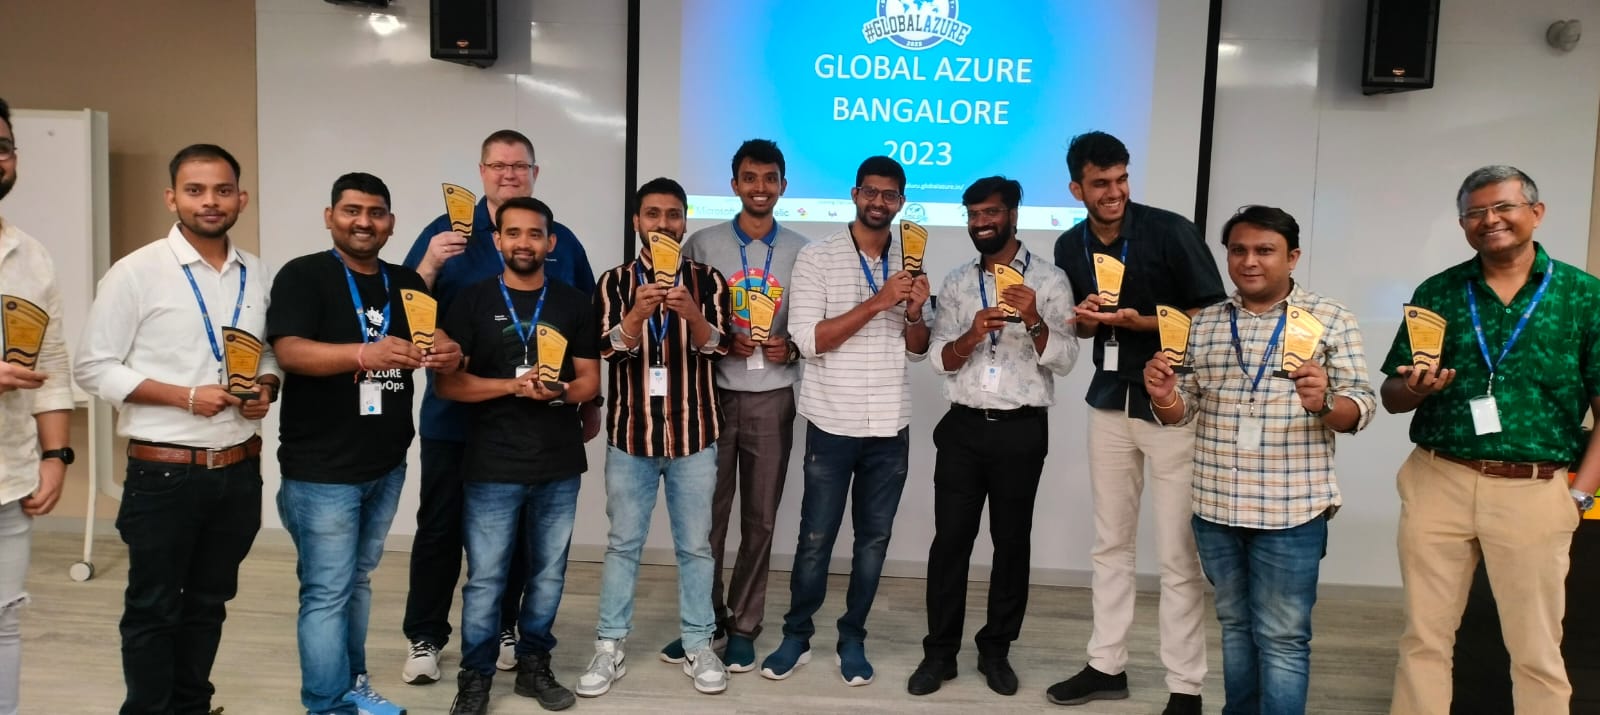 Global Azure Bangalore 2023